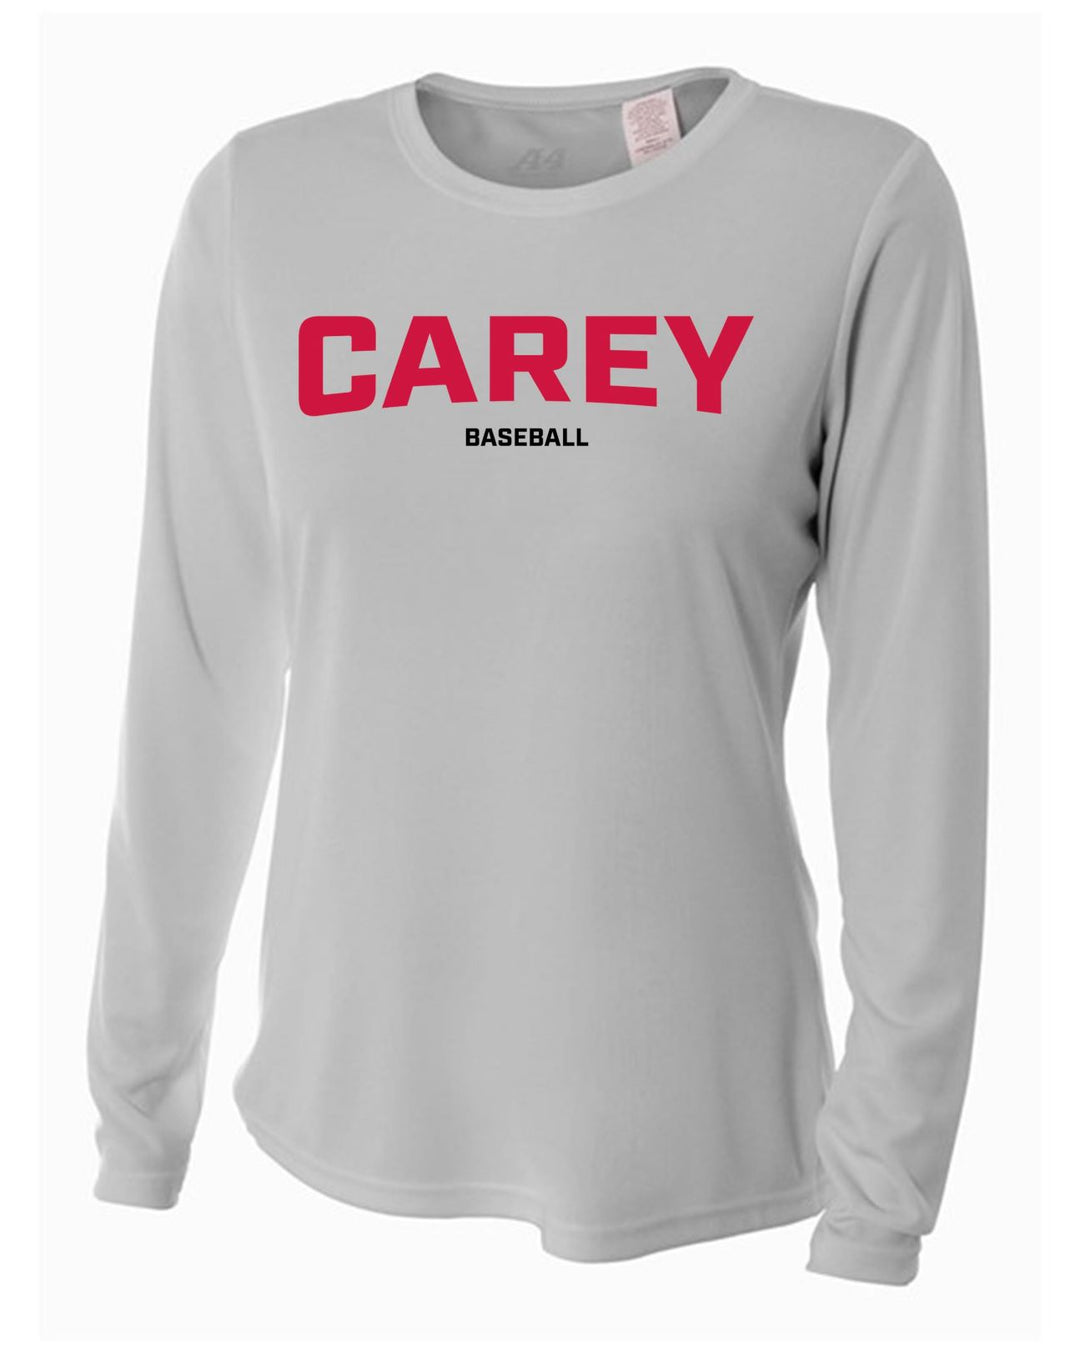 WCU Baseball Women's Long-Sleeve Performance Shirt WCU Baseball Silver CAREY - Third Coast Soccer